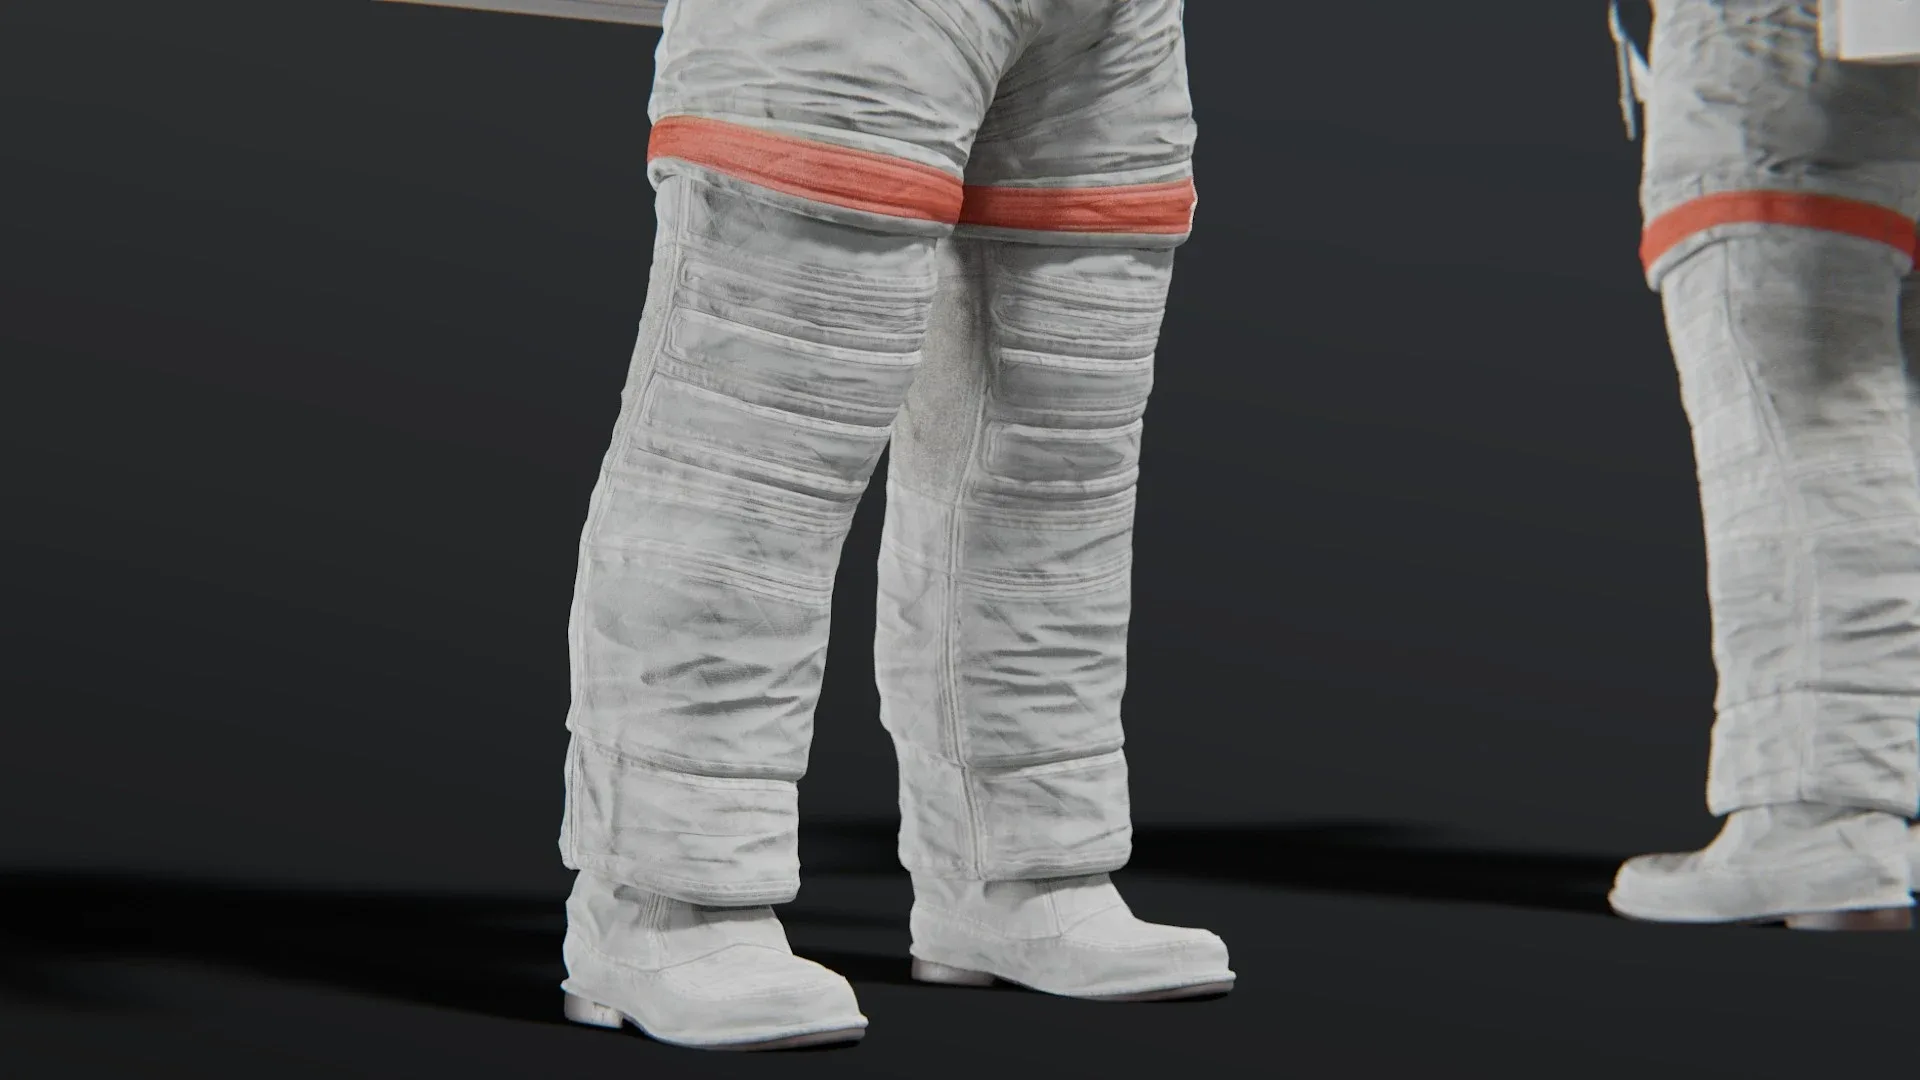 NASA EMU MMU Astronaut Spacesuit Rigged